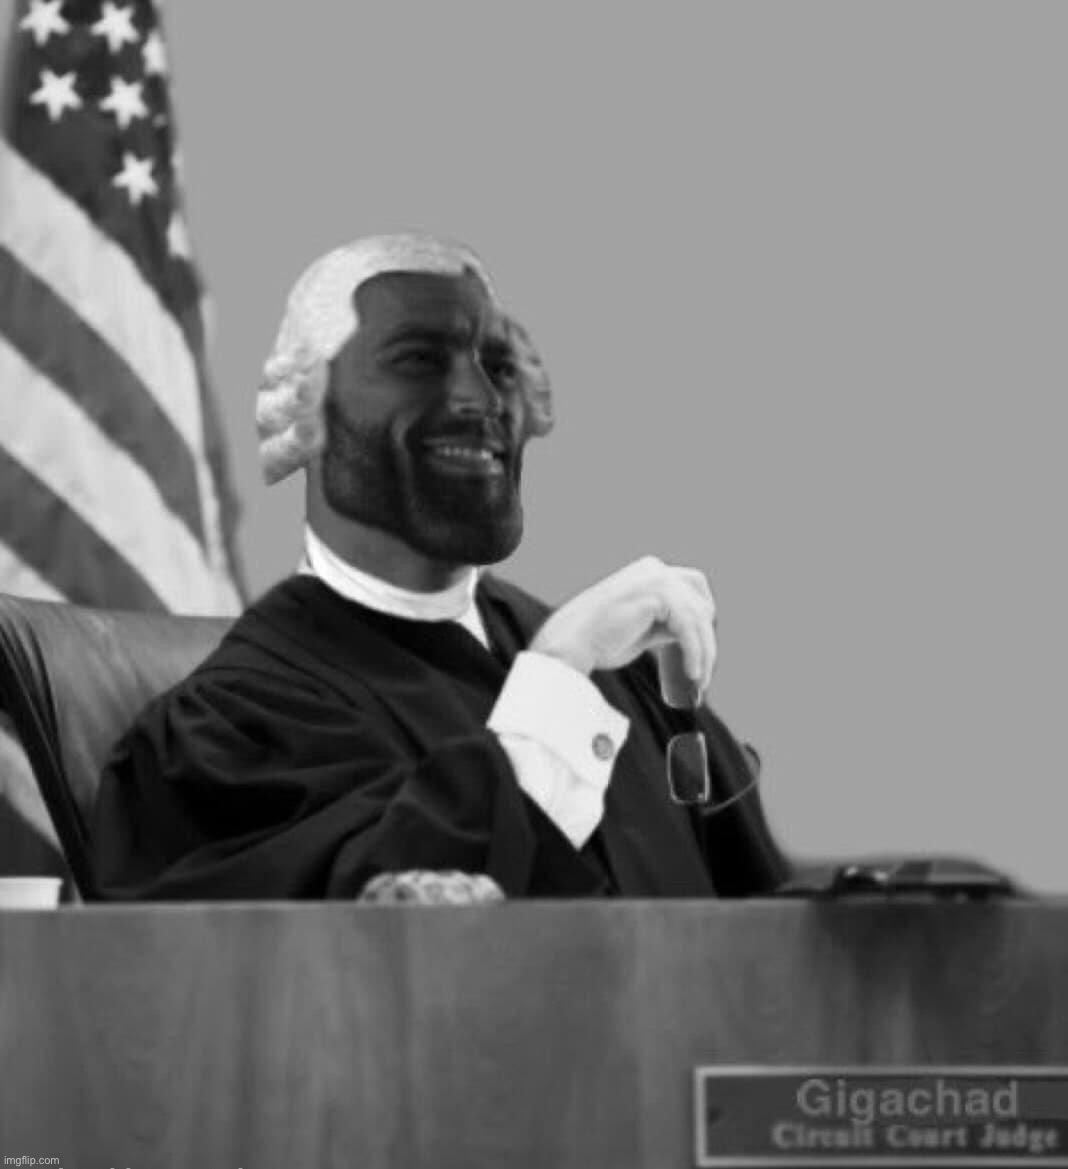 Gigachad judge | image tagged in gigachad judge | made w/ Imgflip meme maker